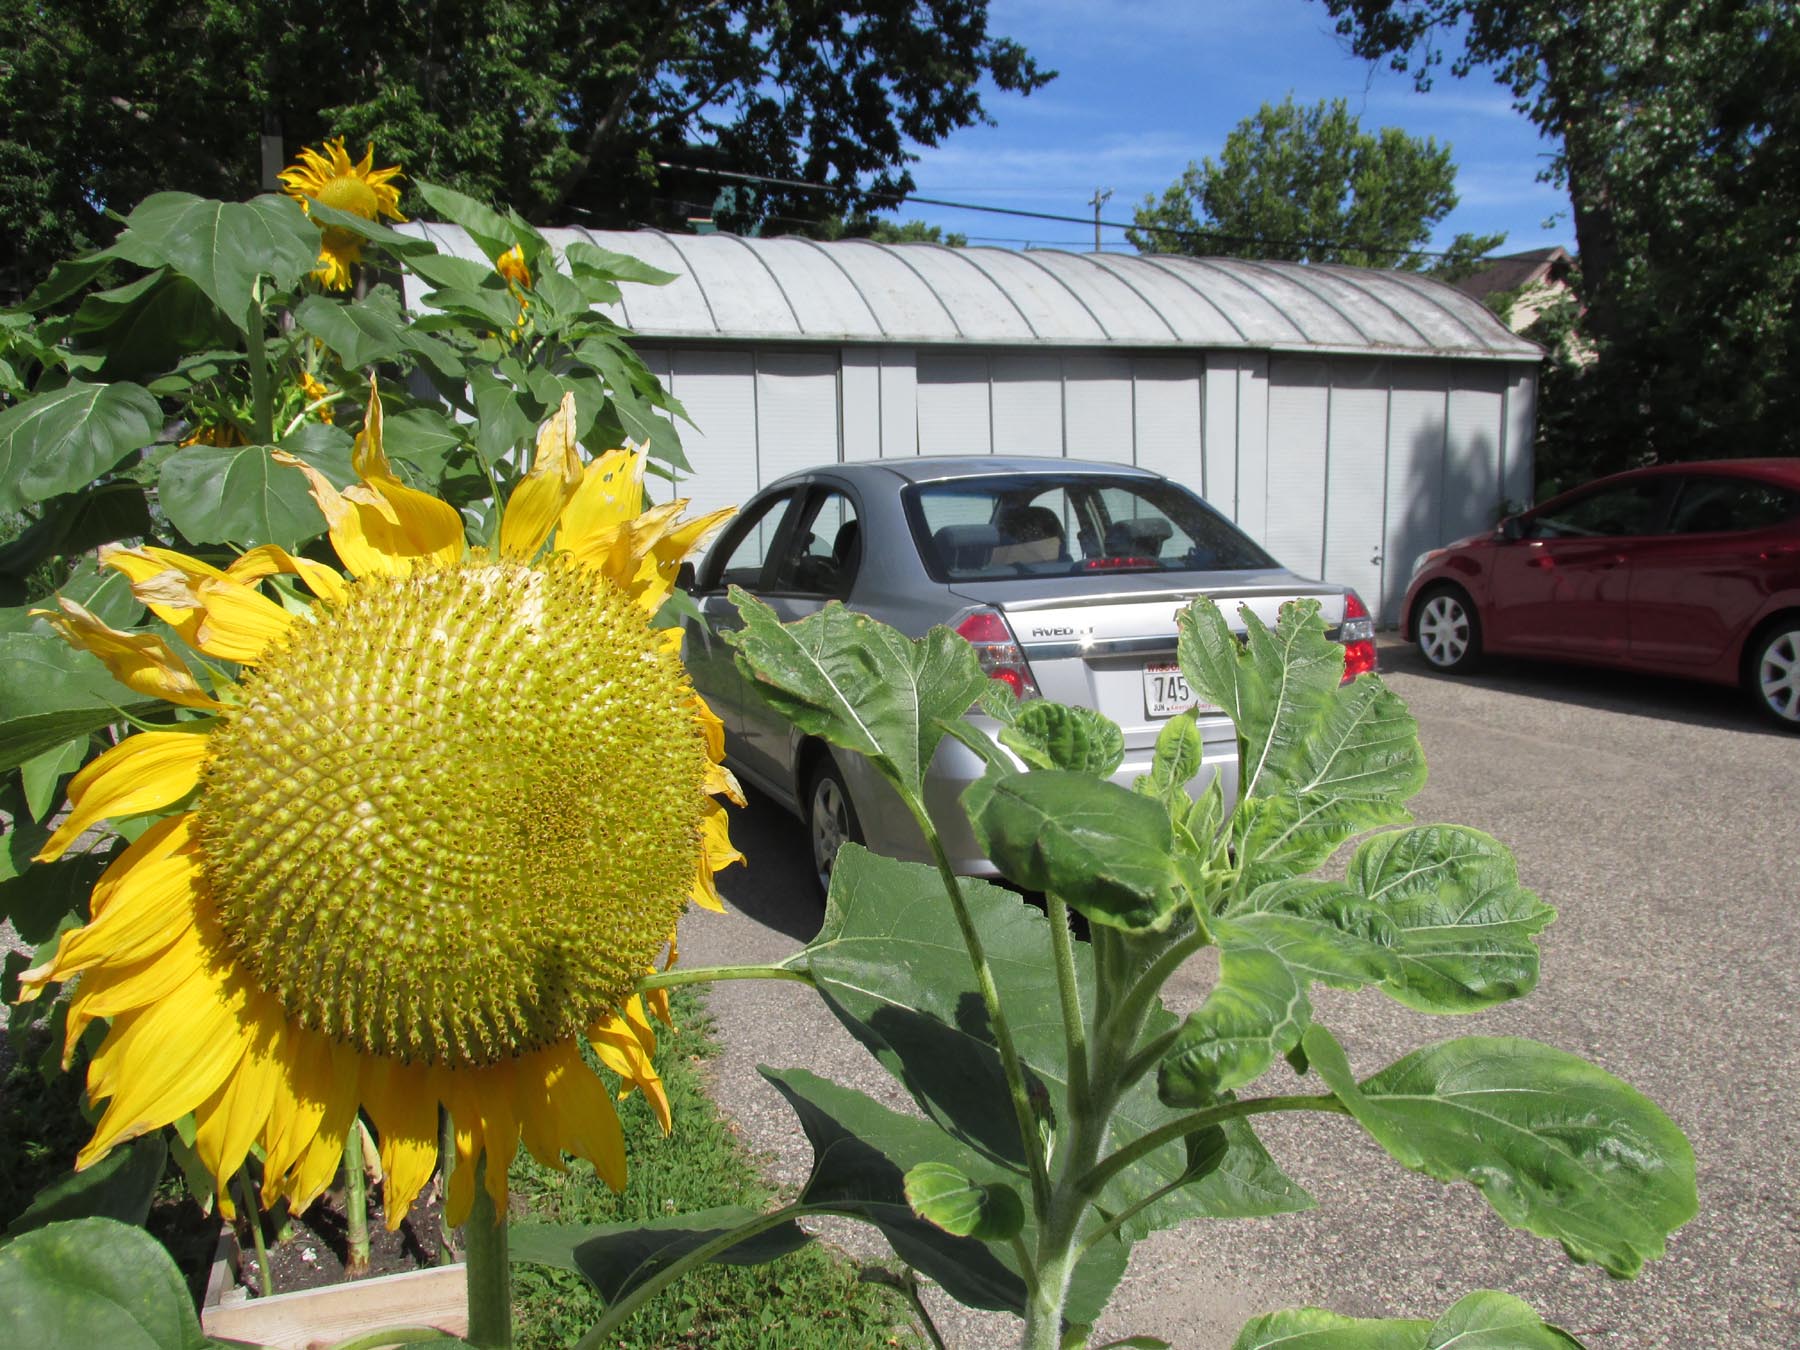 Sunflowers planted near a Trachte garage on E. Dayton.